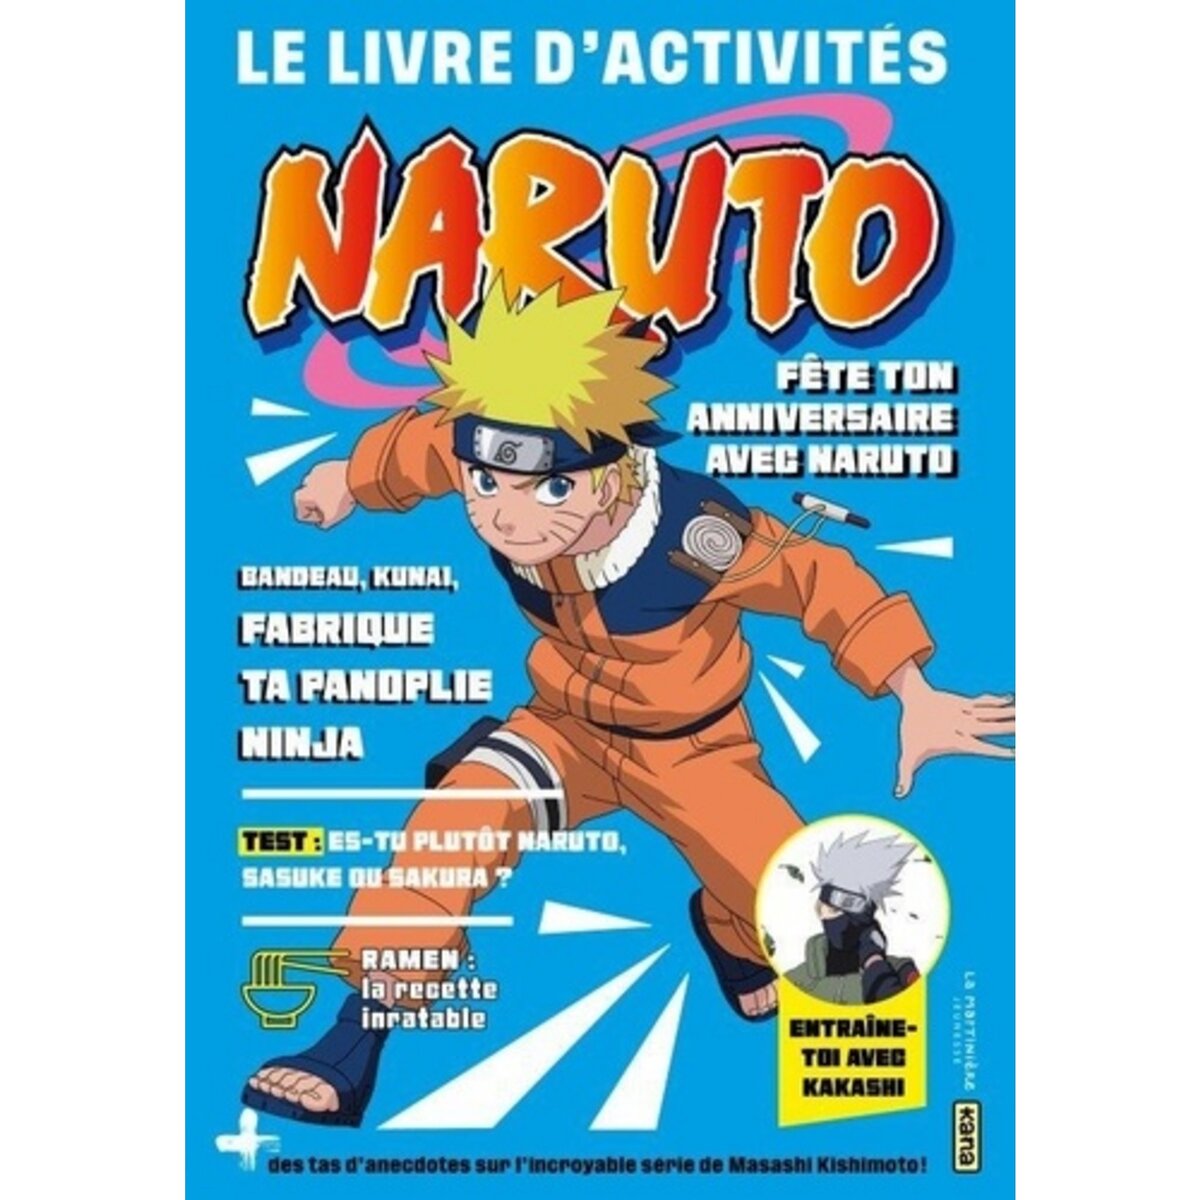 Mon carnet secret – Naruto, Sakura, Sasuke